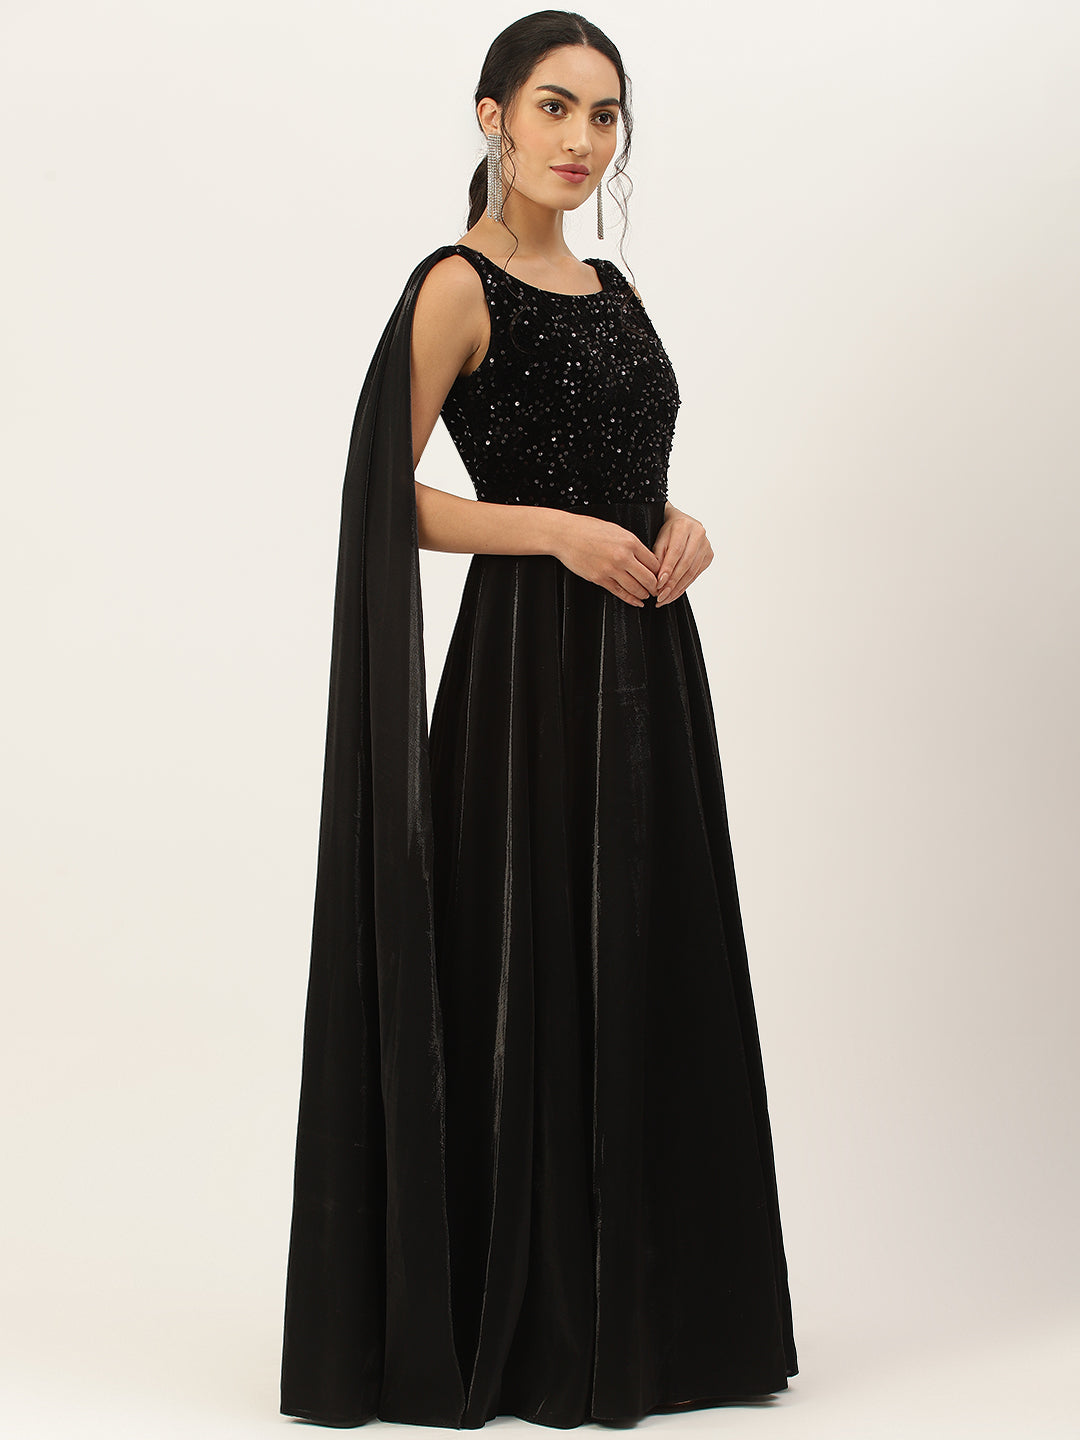 NAOMI Black Gothic Ball Gown Tulle Bishop Long Sleeves Wedding - Etsy |  Wedding dress long sleeve, Black wedding dresses, Black wedding